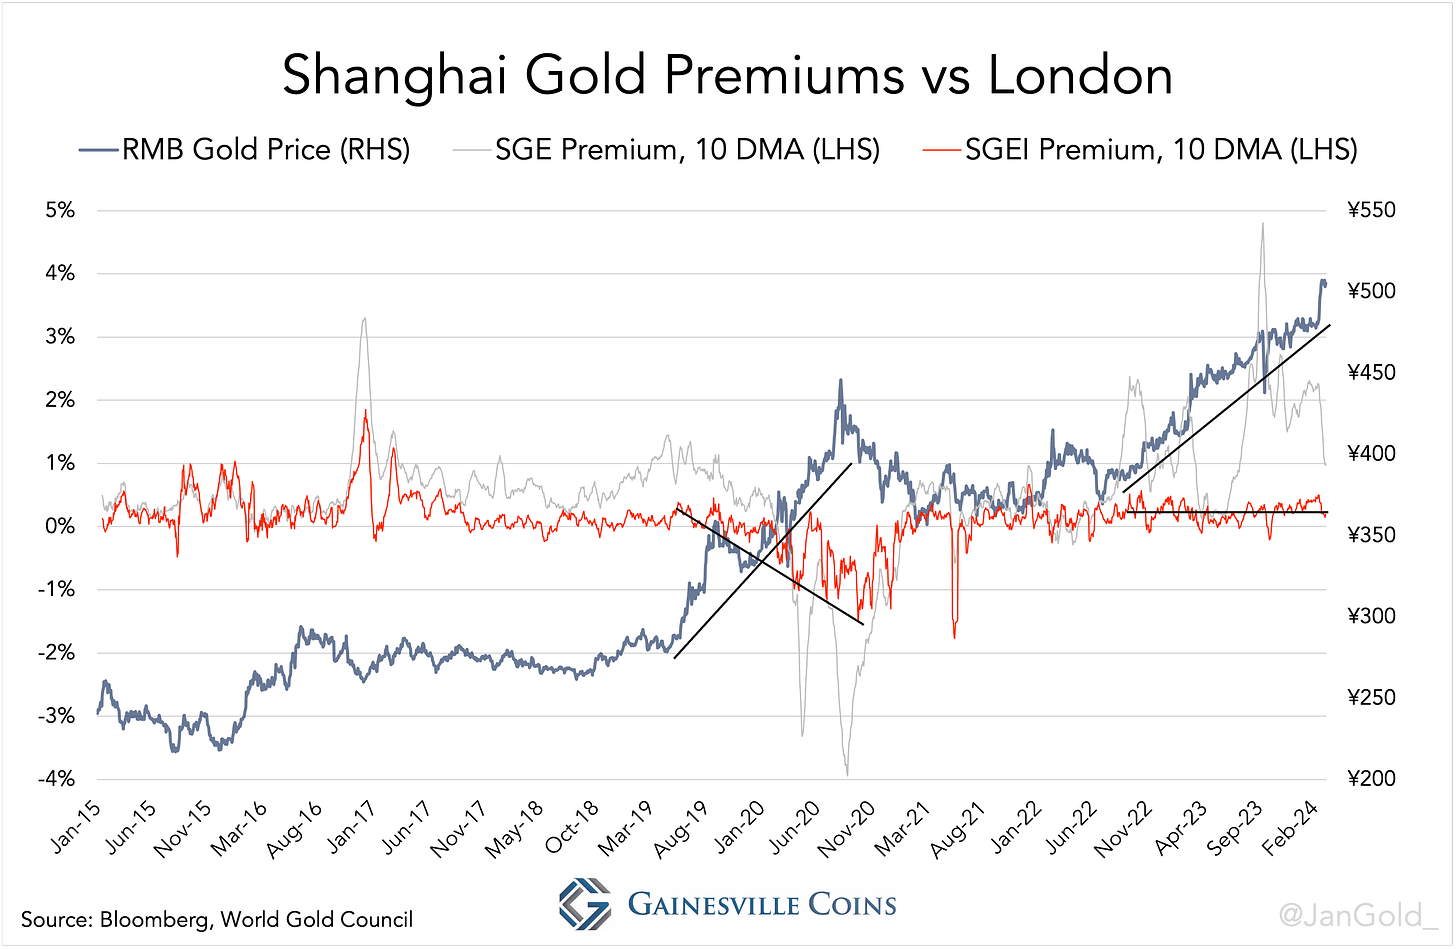 Shanghai Gold Premiums vs London